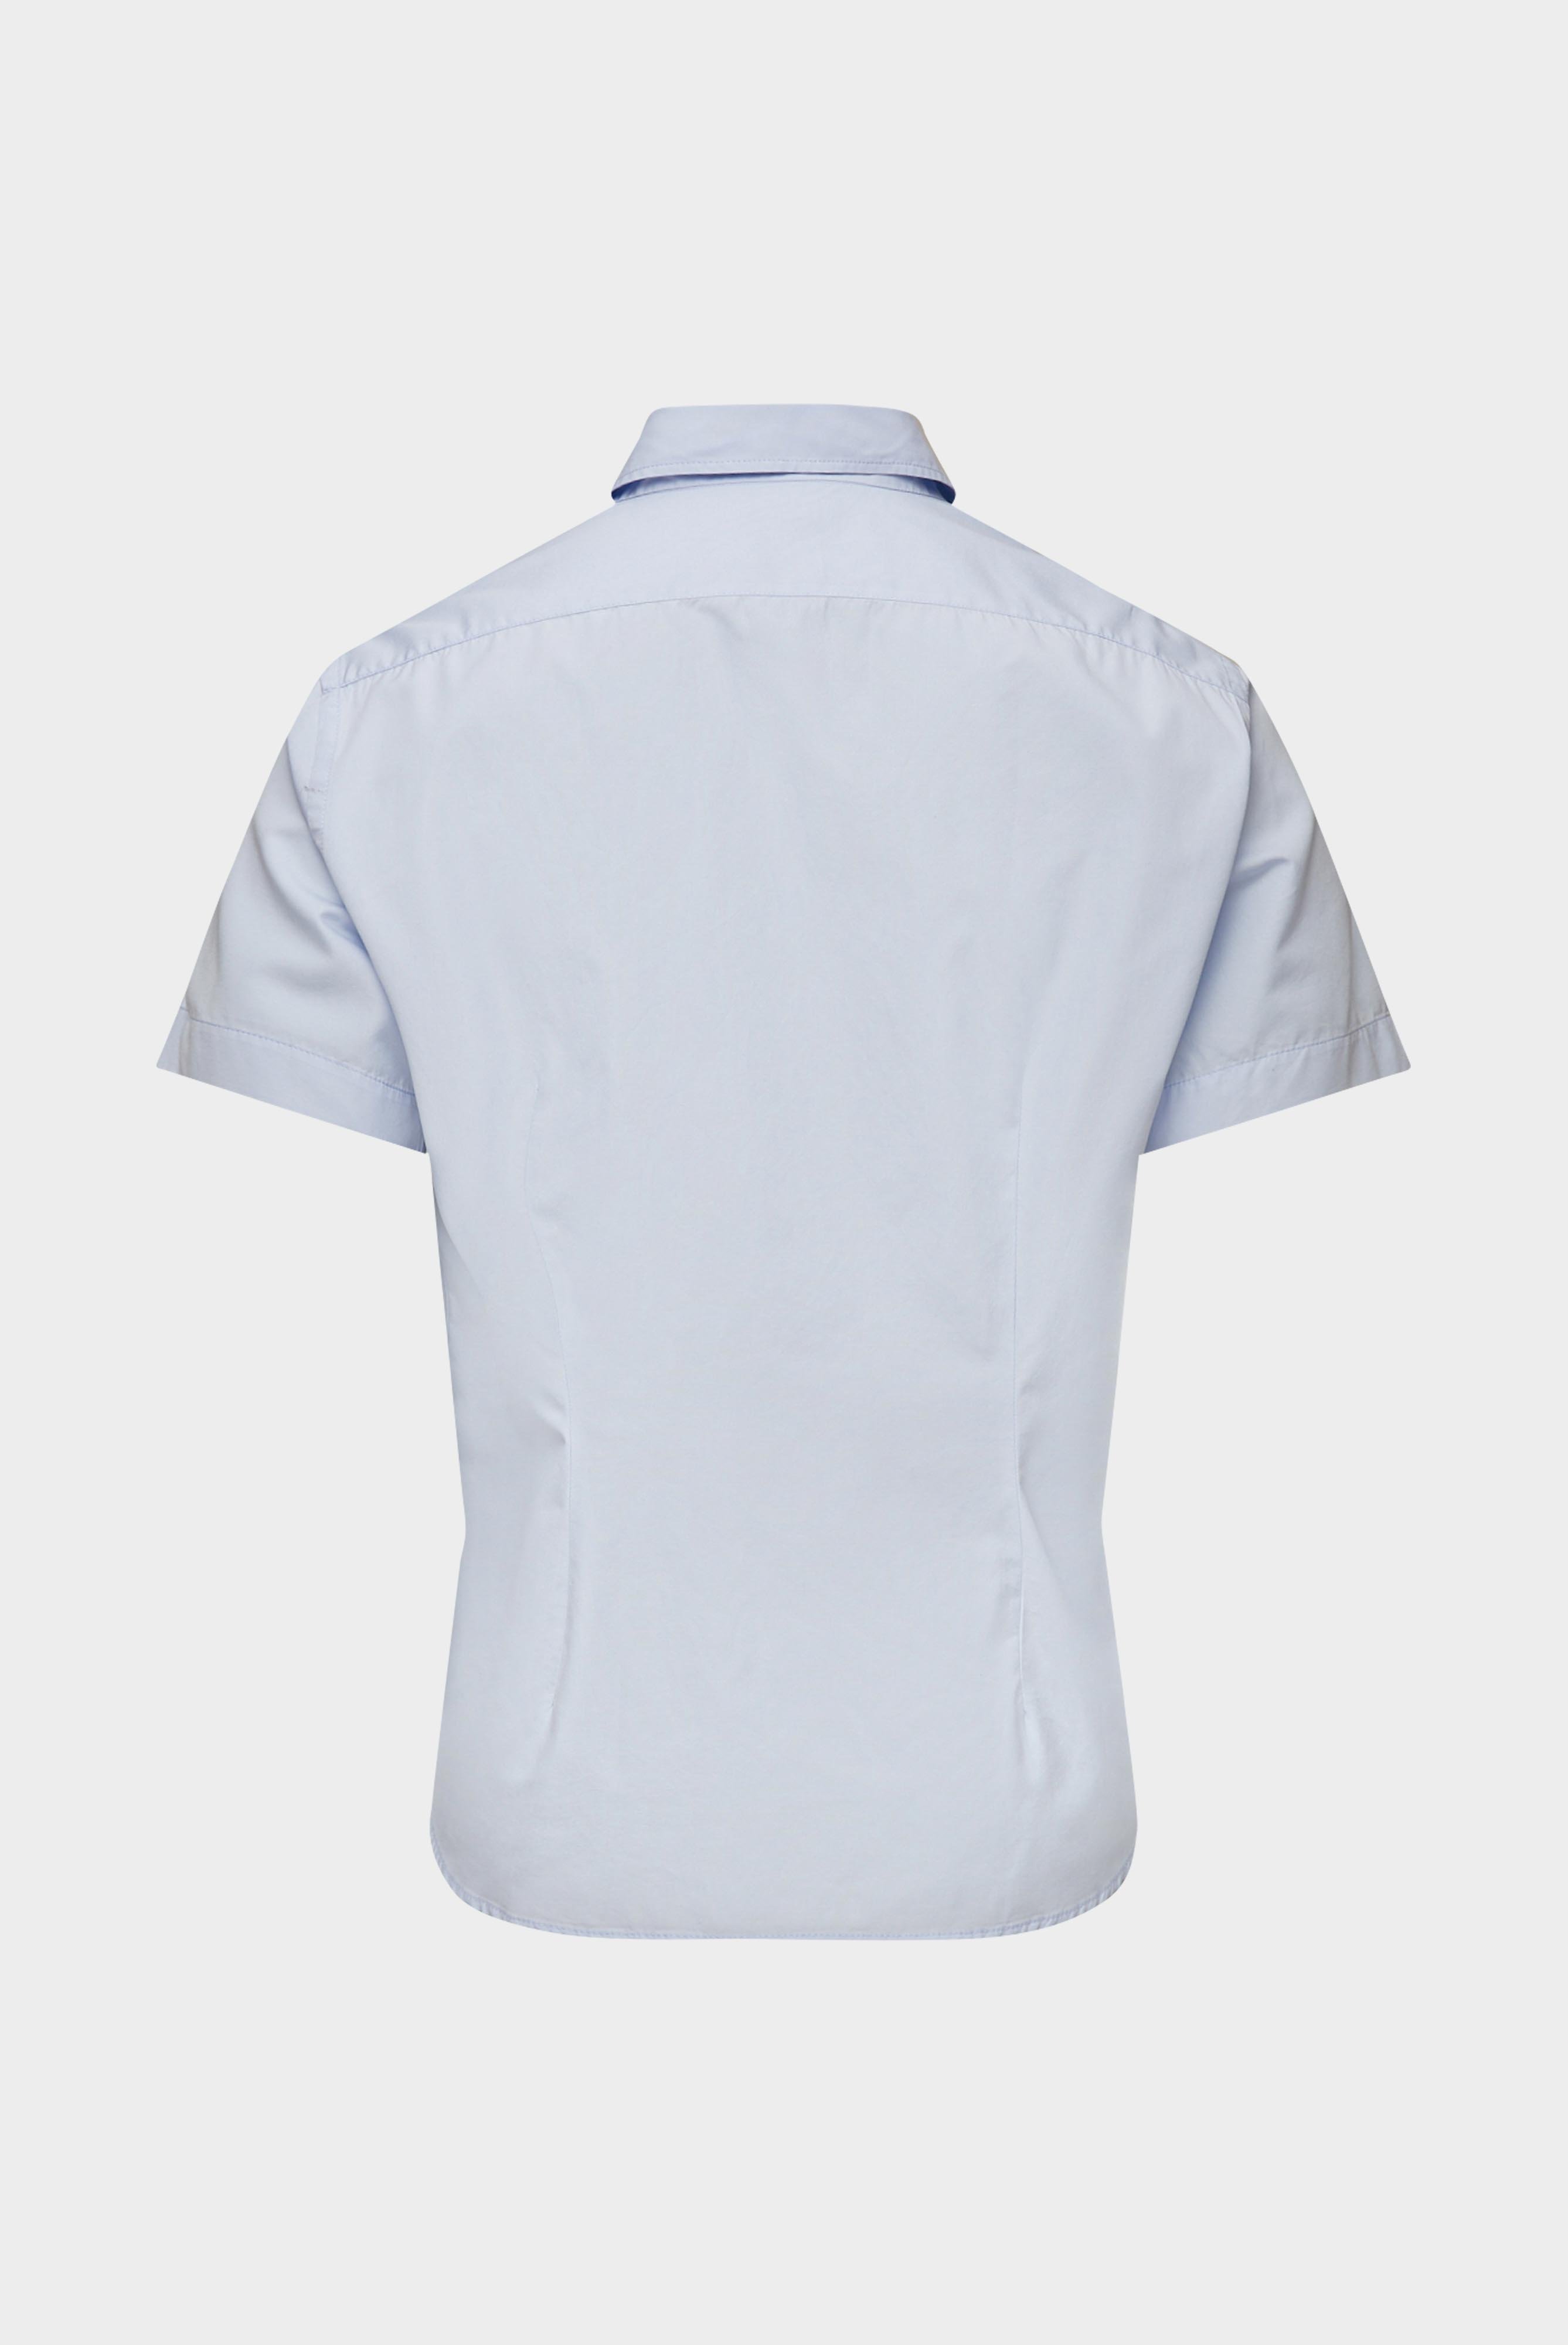 Casual Shirts+Short-sleeved shirt in cotton poplin+20.2053.Q2.130648.715.39